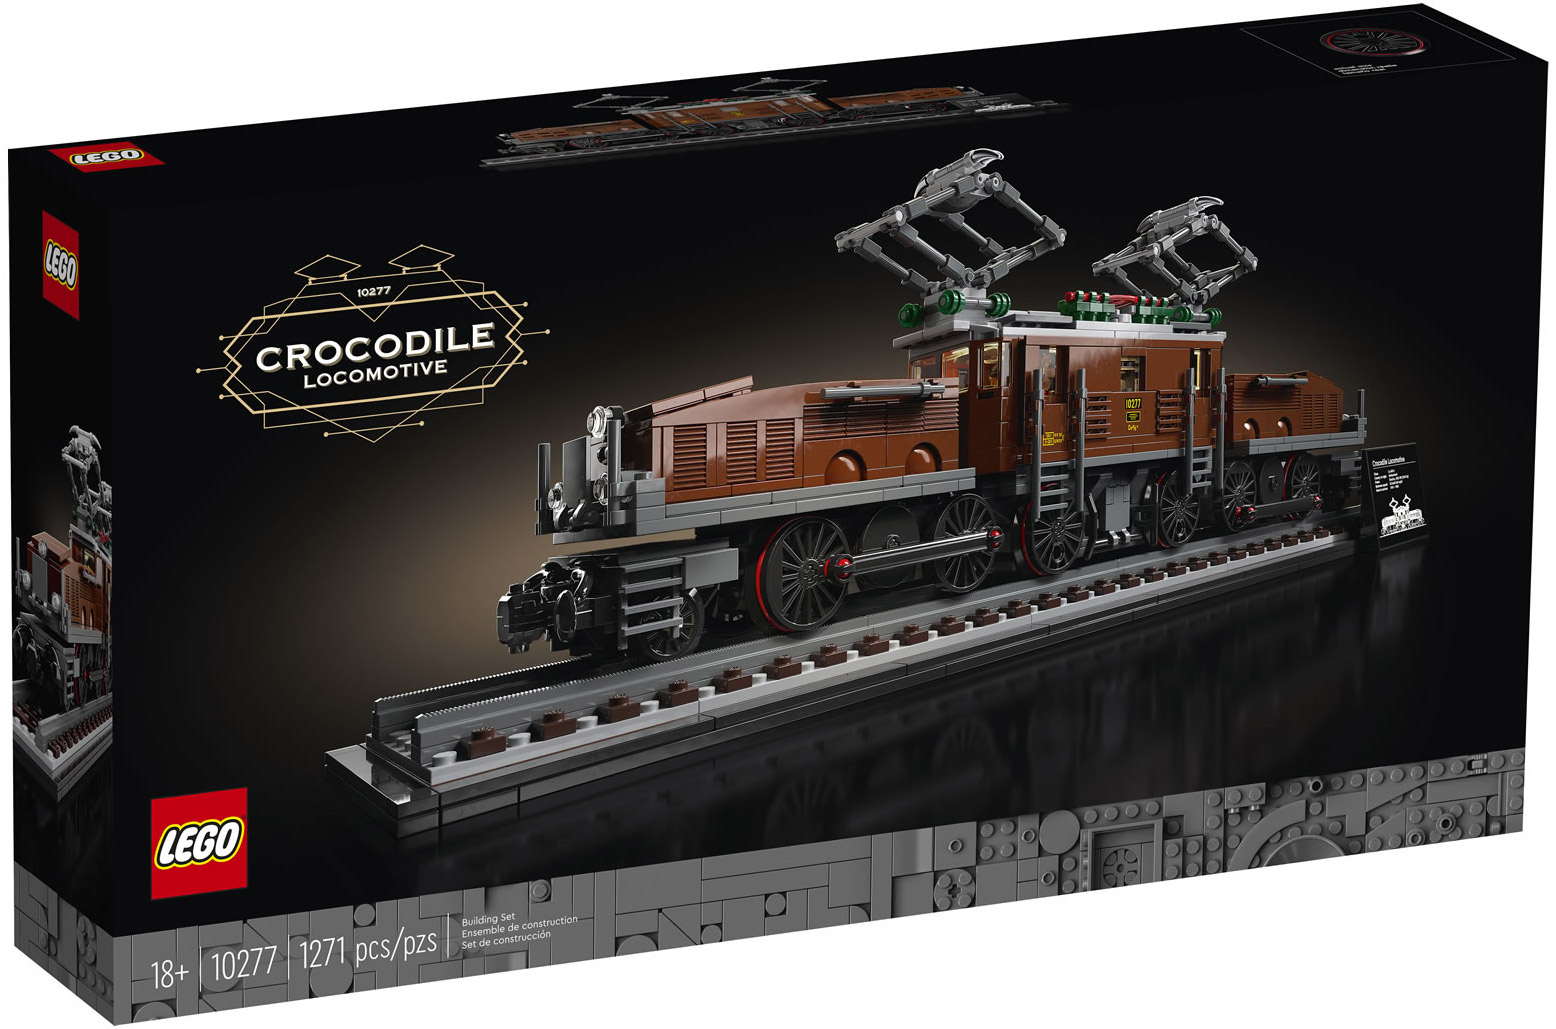 impression 3d rampe helicoidale - Page 11 10277-la-locomotive-crocodile-1-1592297607